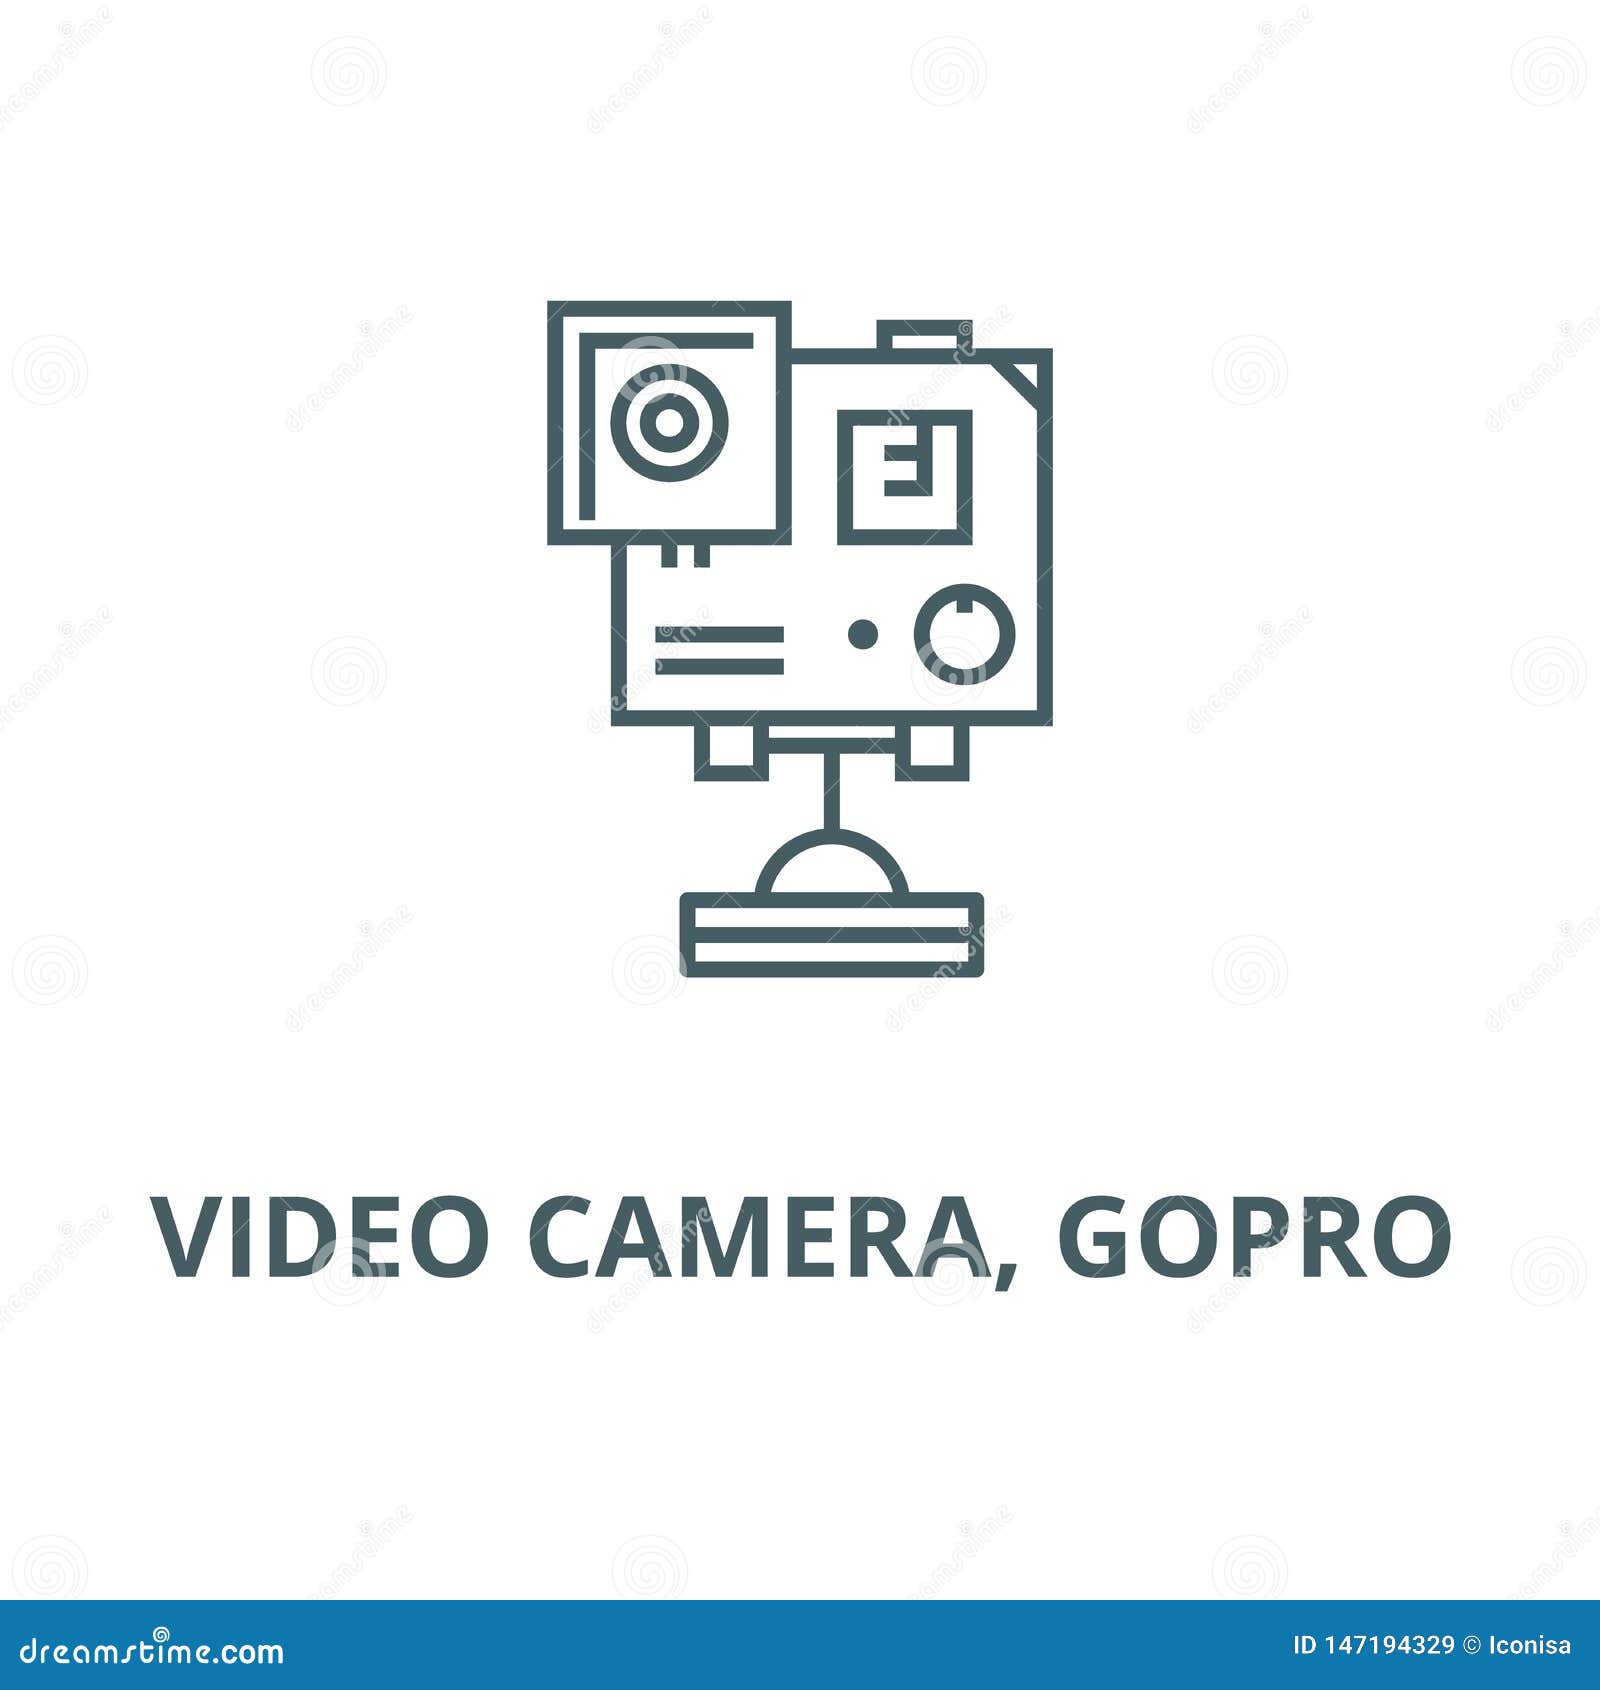 Gopro Logo Illustrations Vectors